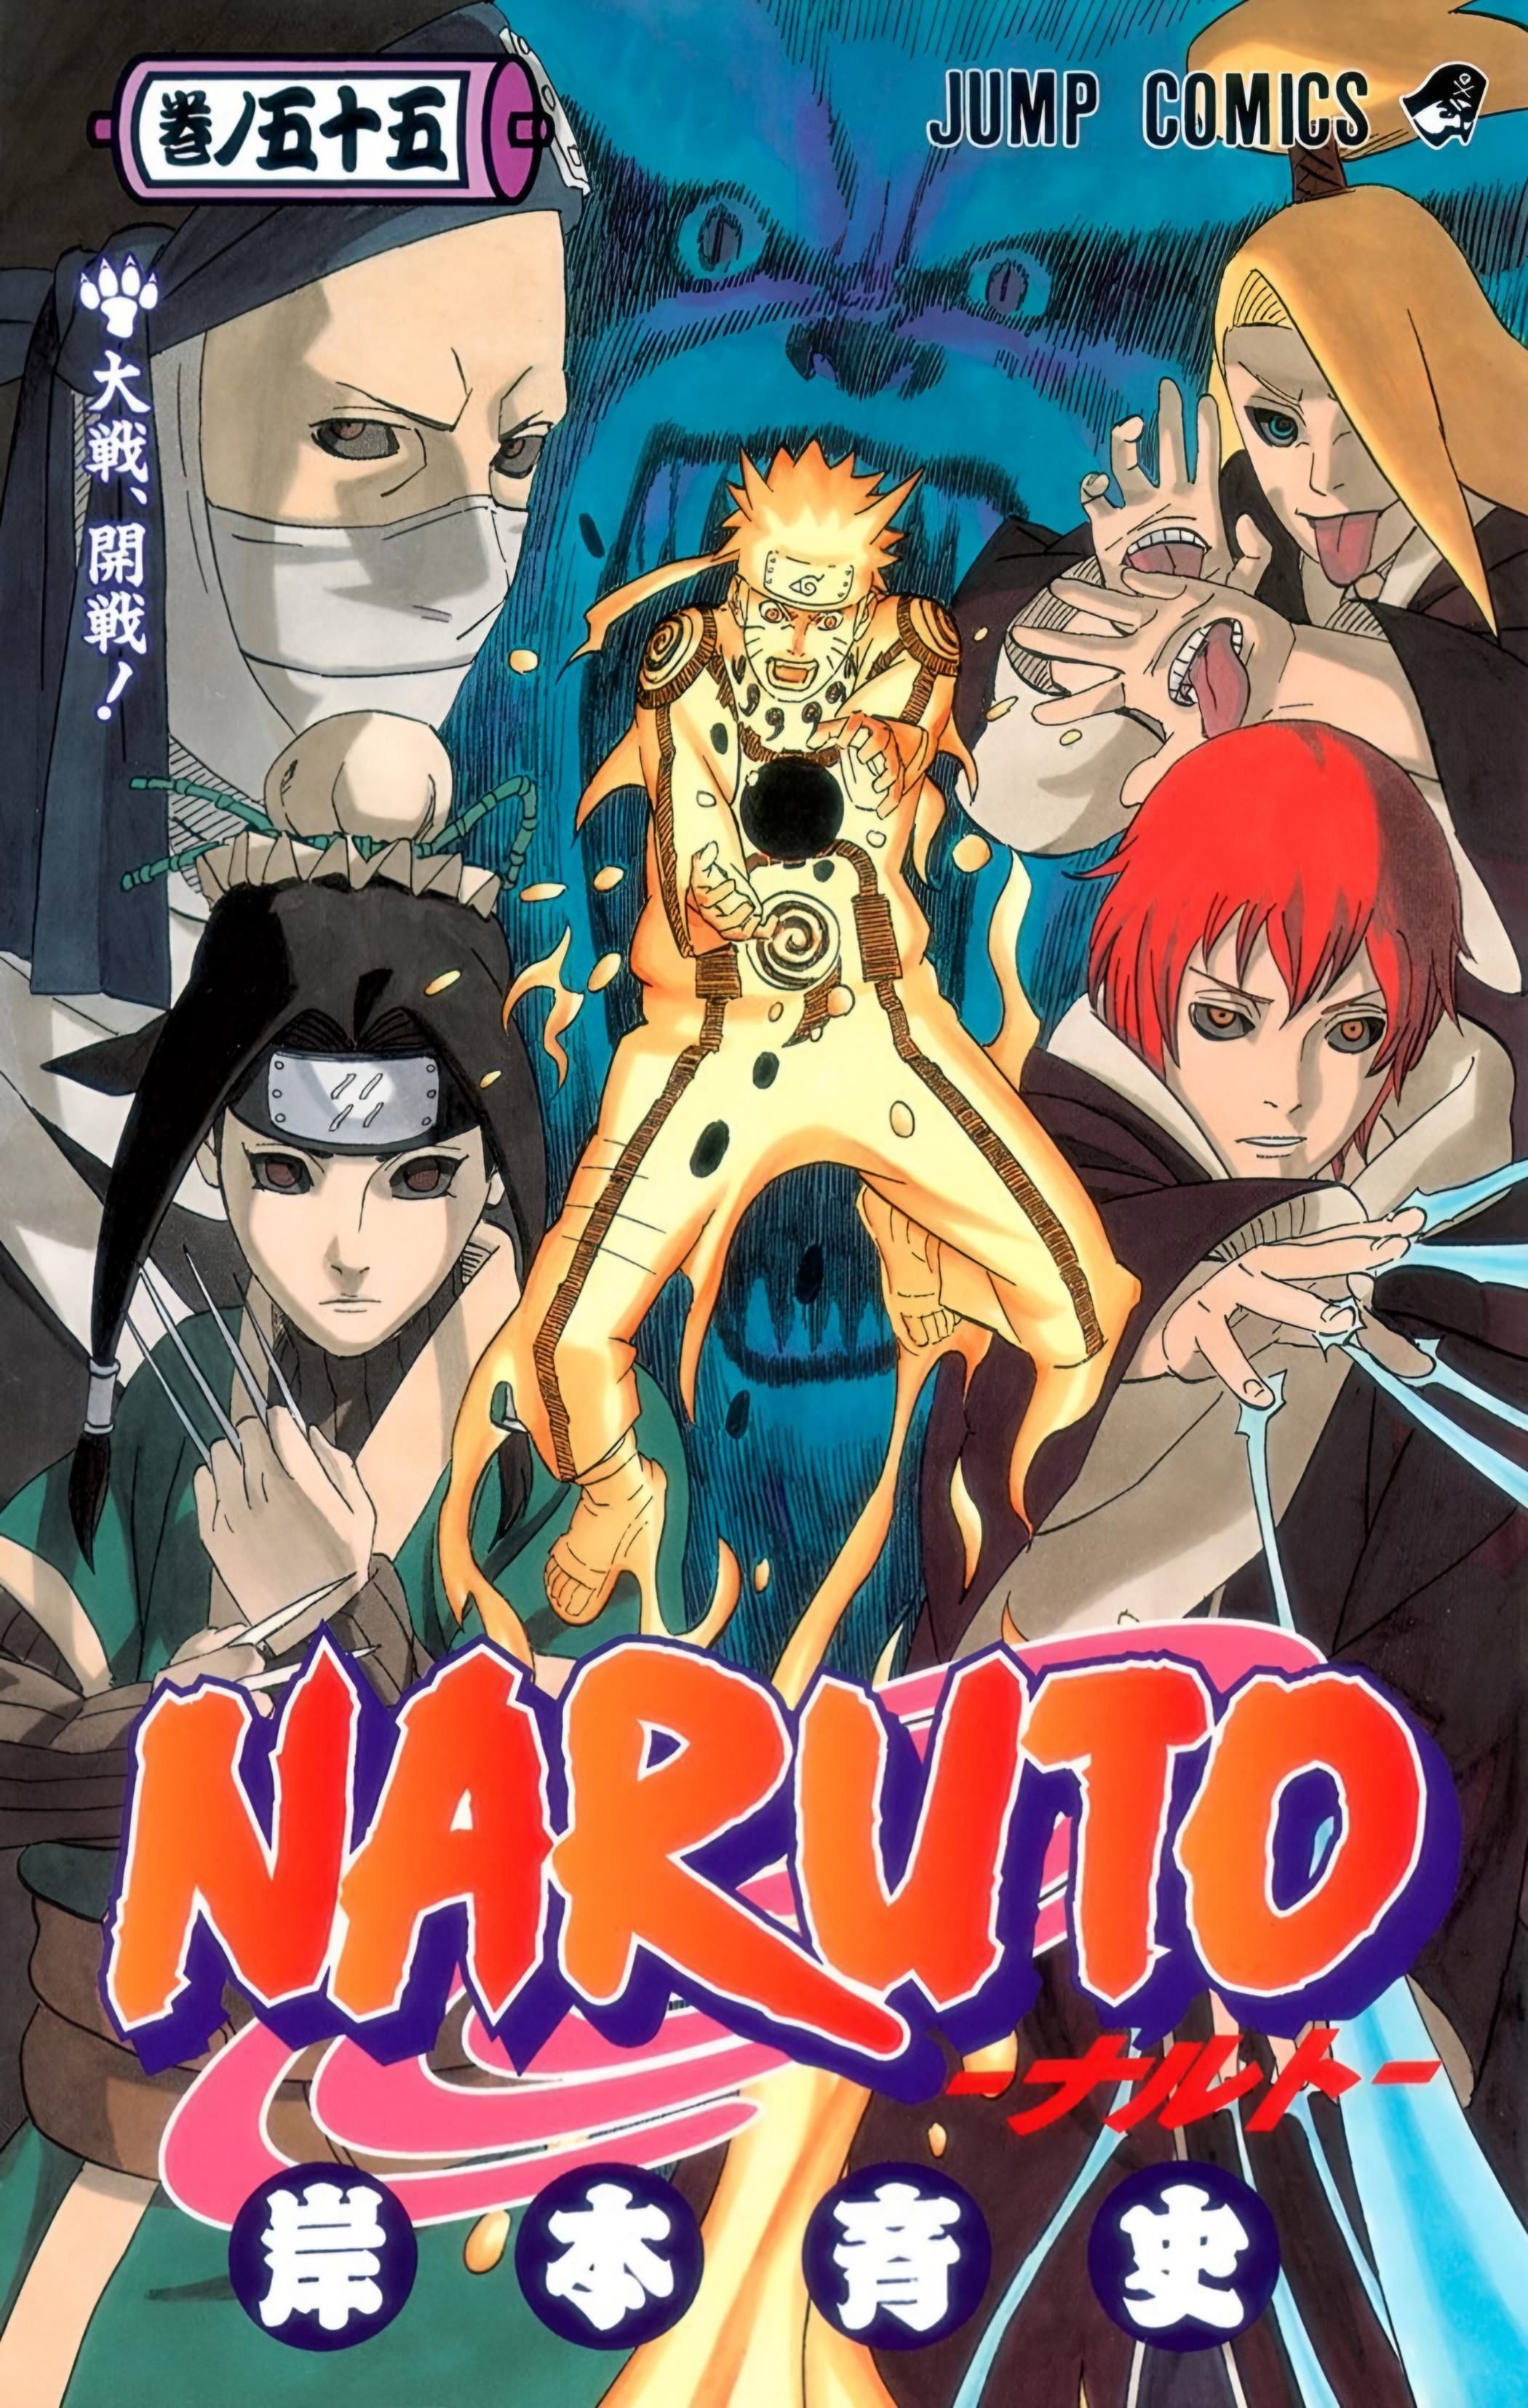 Naruto Capitulo 515 em portugues